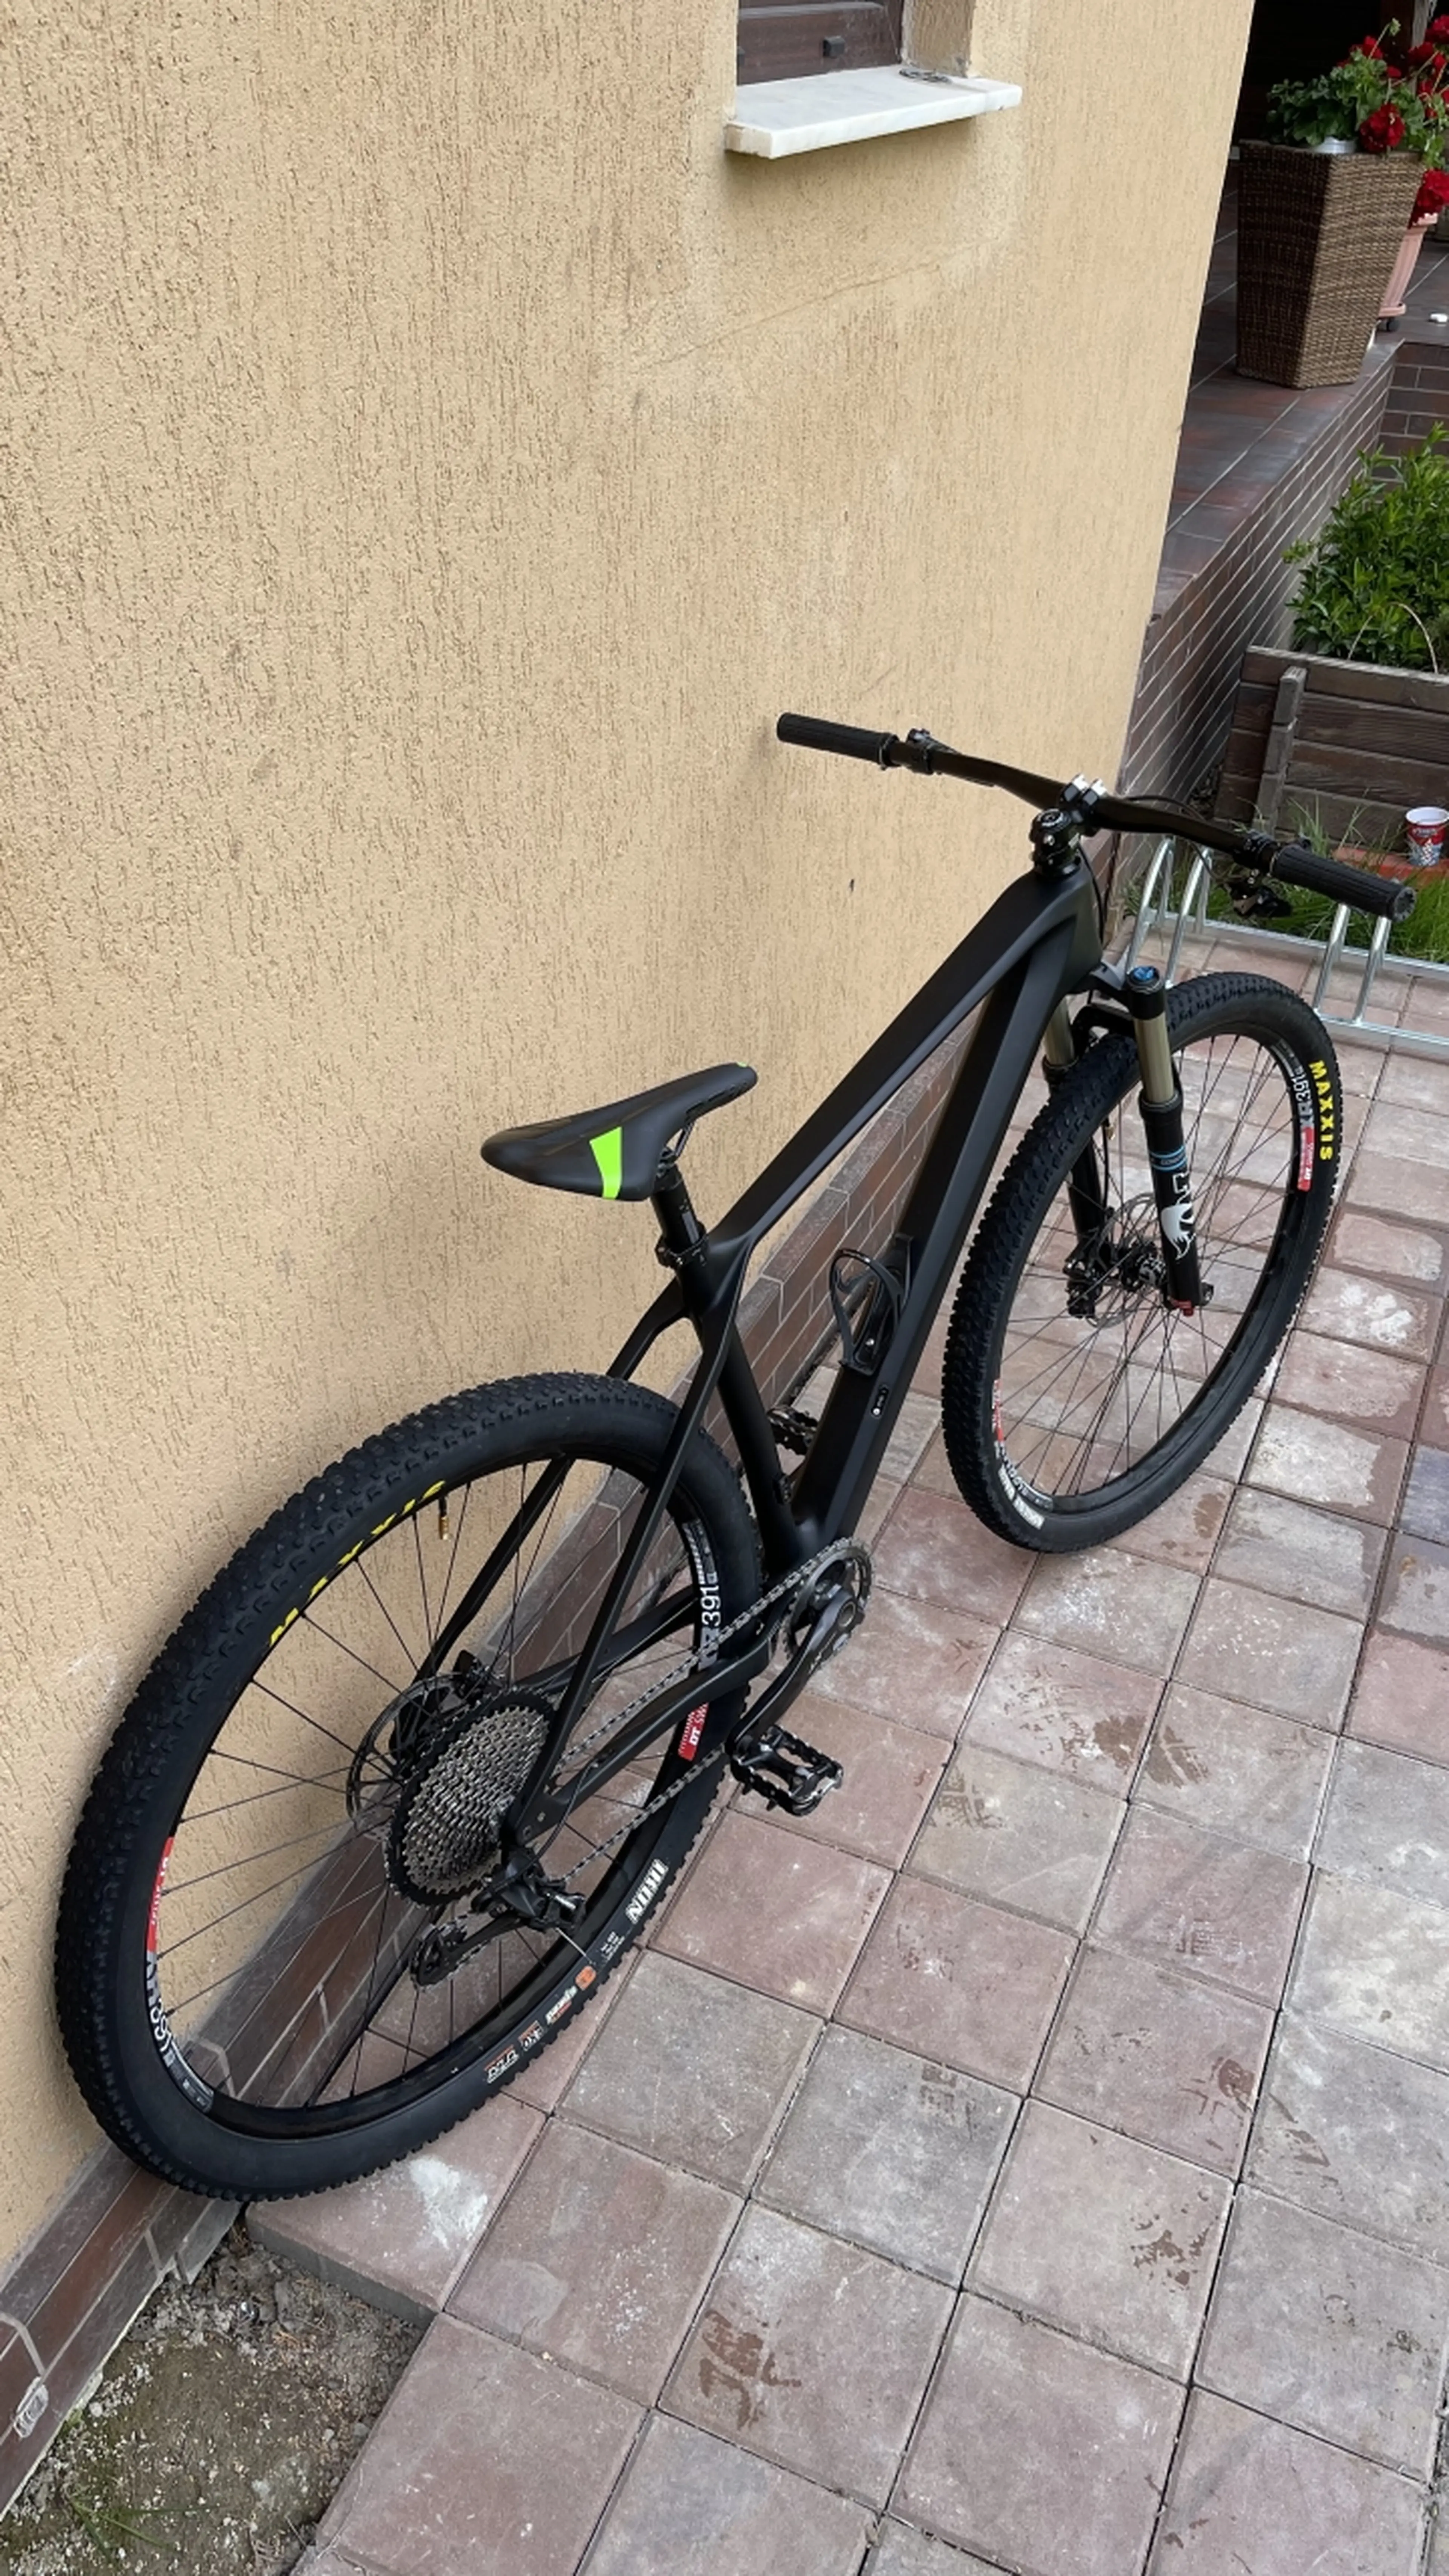 2. Bicicleta XC Custom 1x12 / Carbon / Fox / L /9.5kg